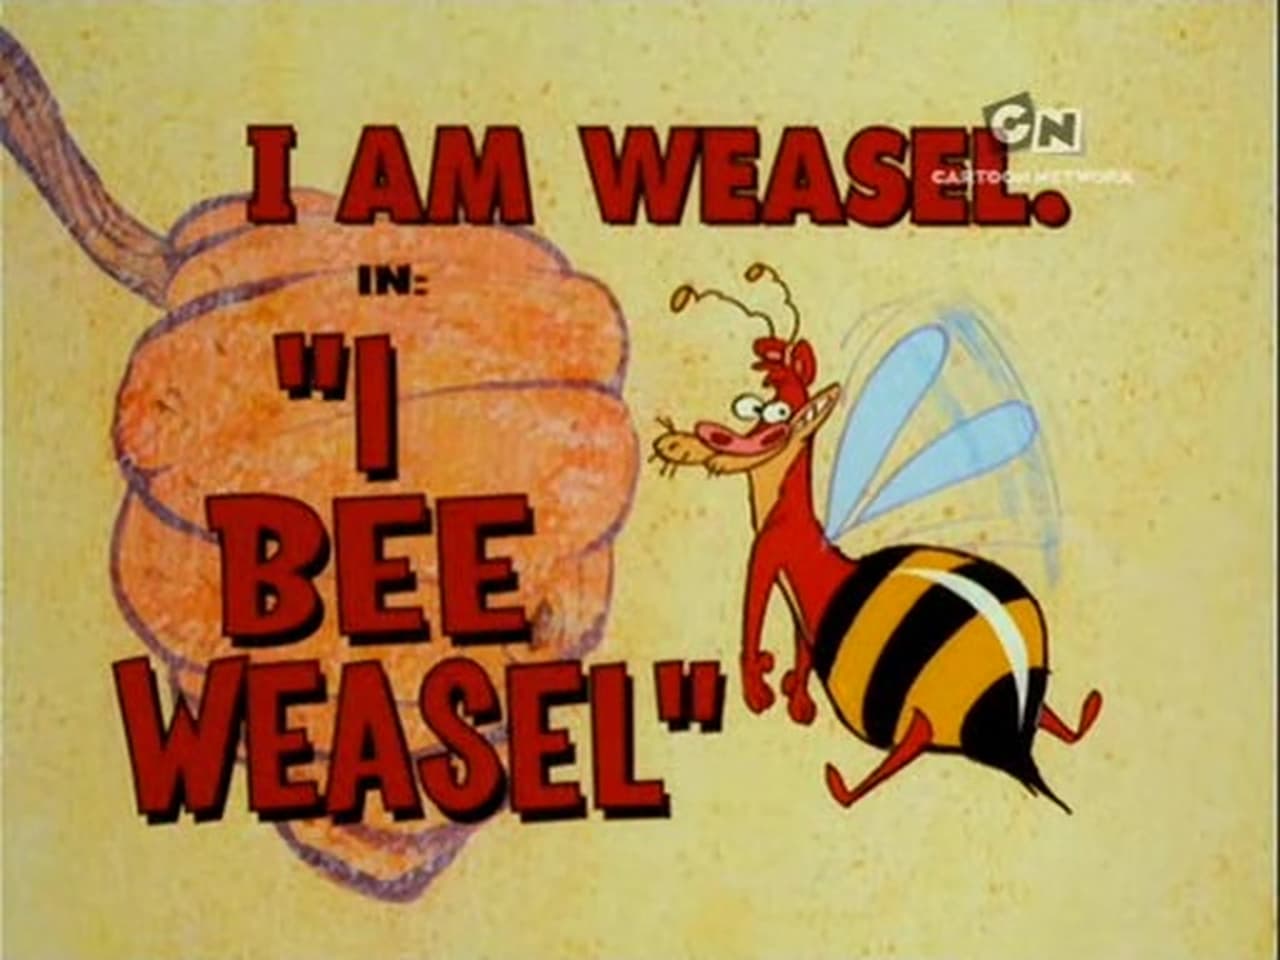 I Bee Weasel